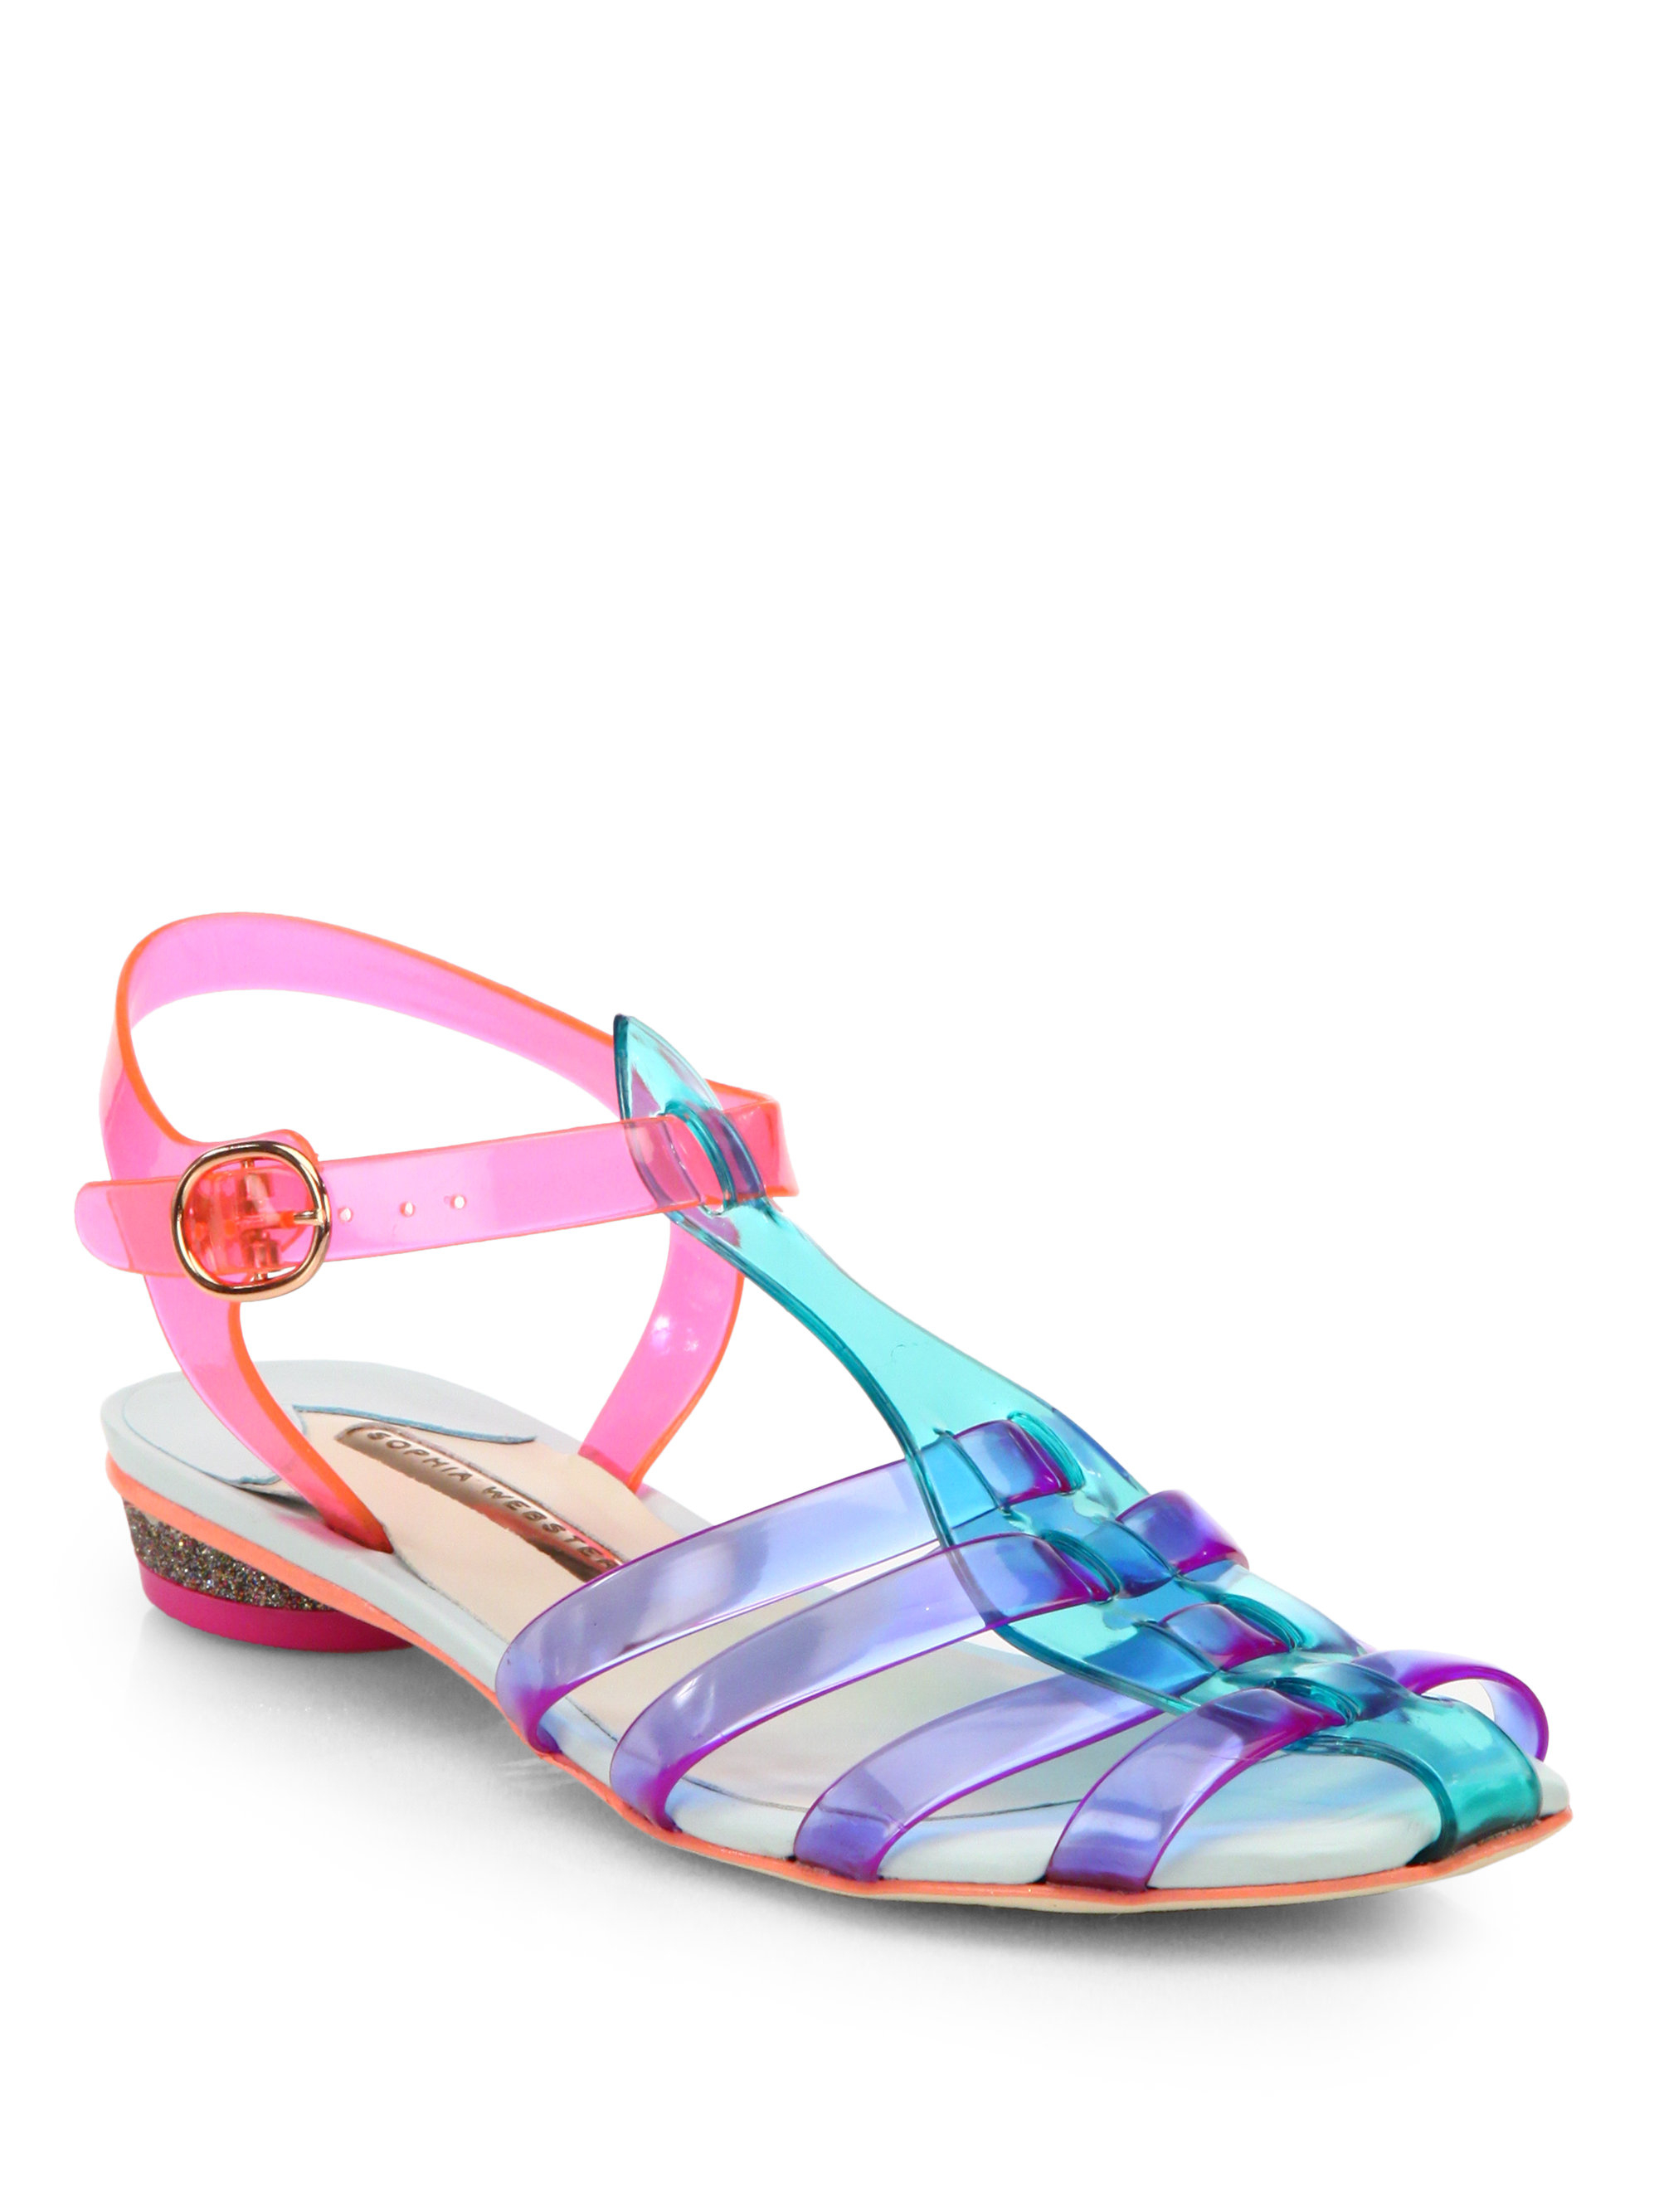 Sophia Webster Violetta Colorblock Translucent Jelly Sandals in ...